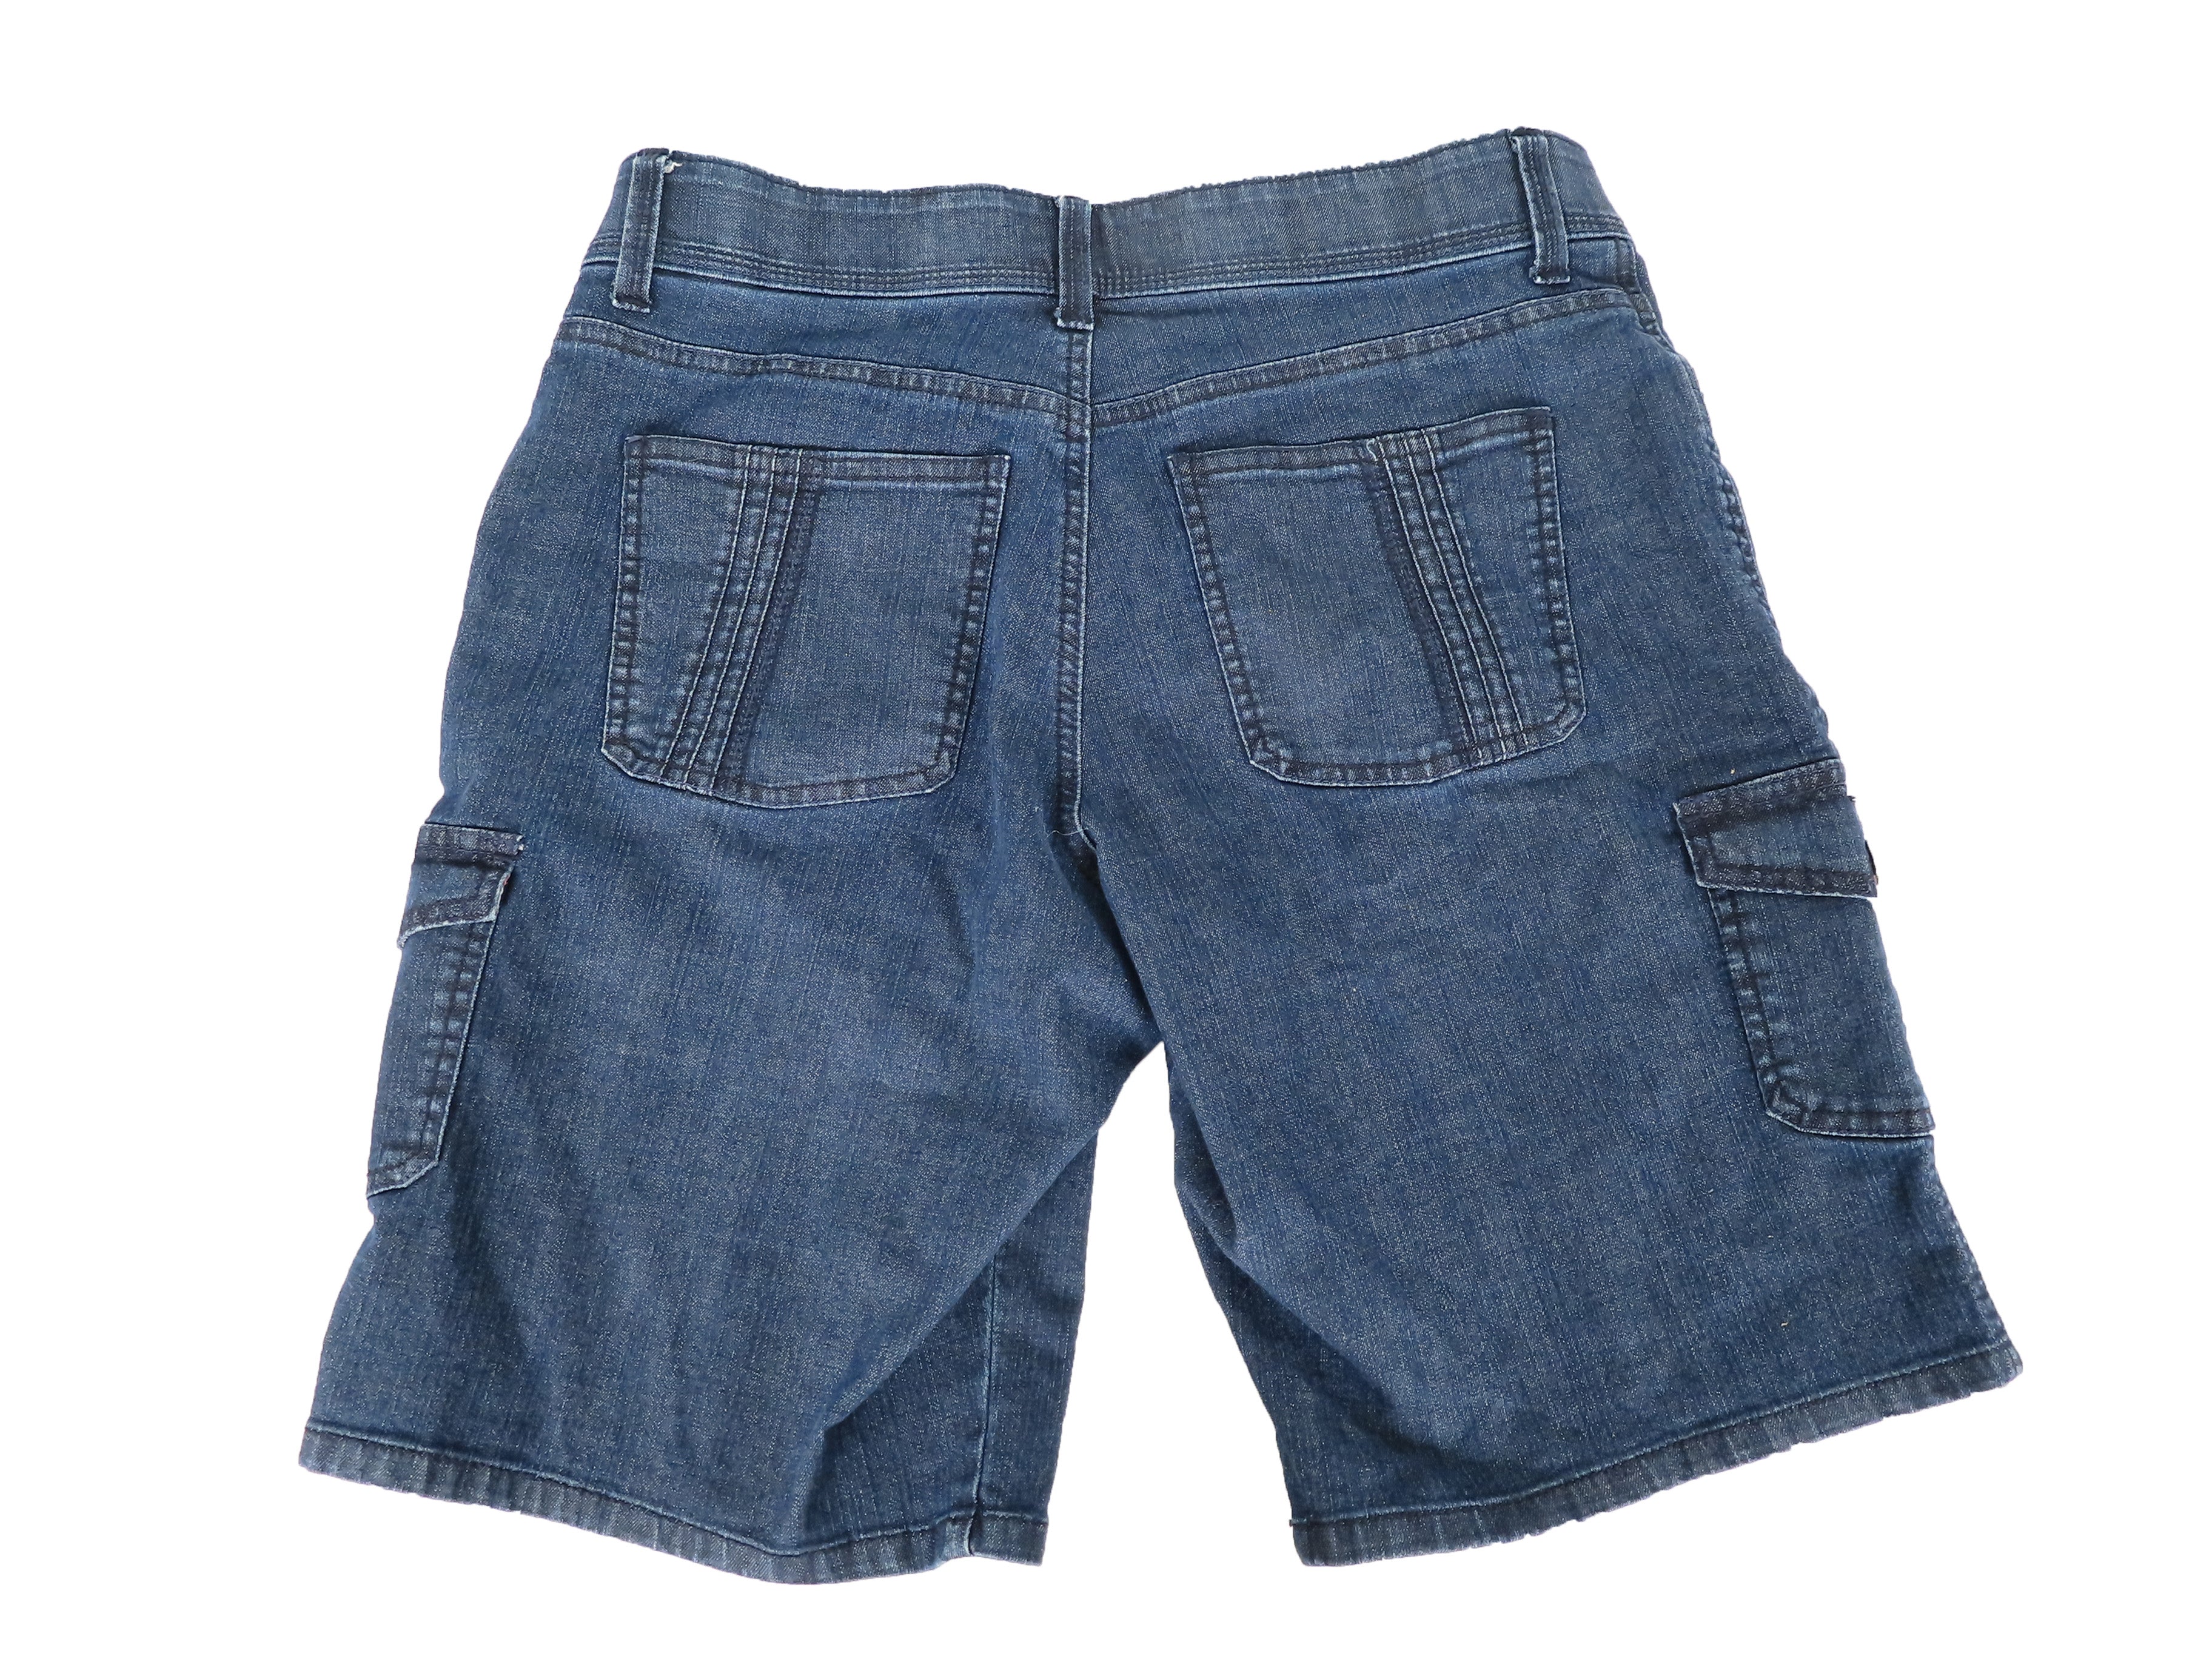 Lee Sinfully Soft Denim Shorts Size 10 (Medium)